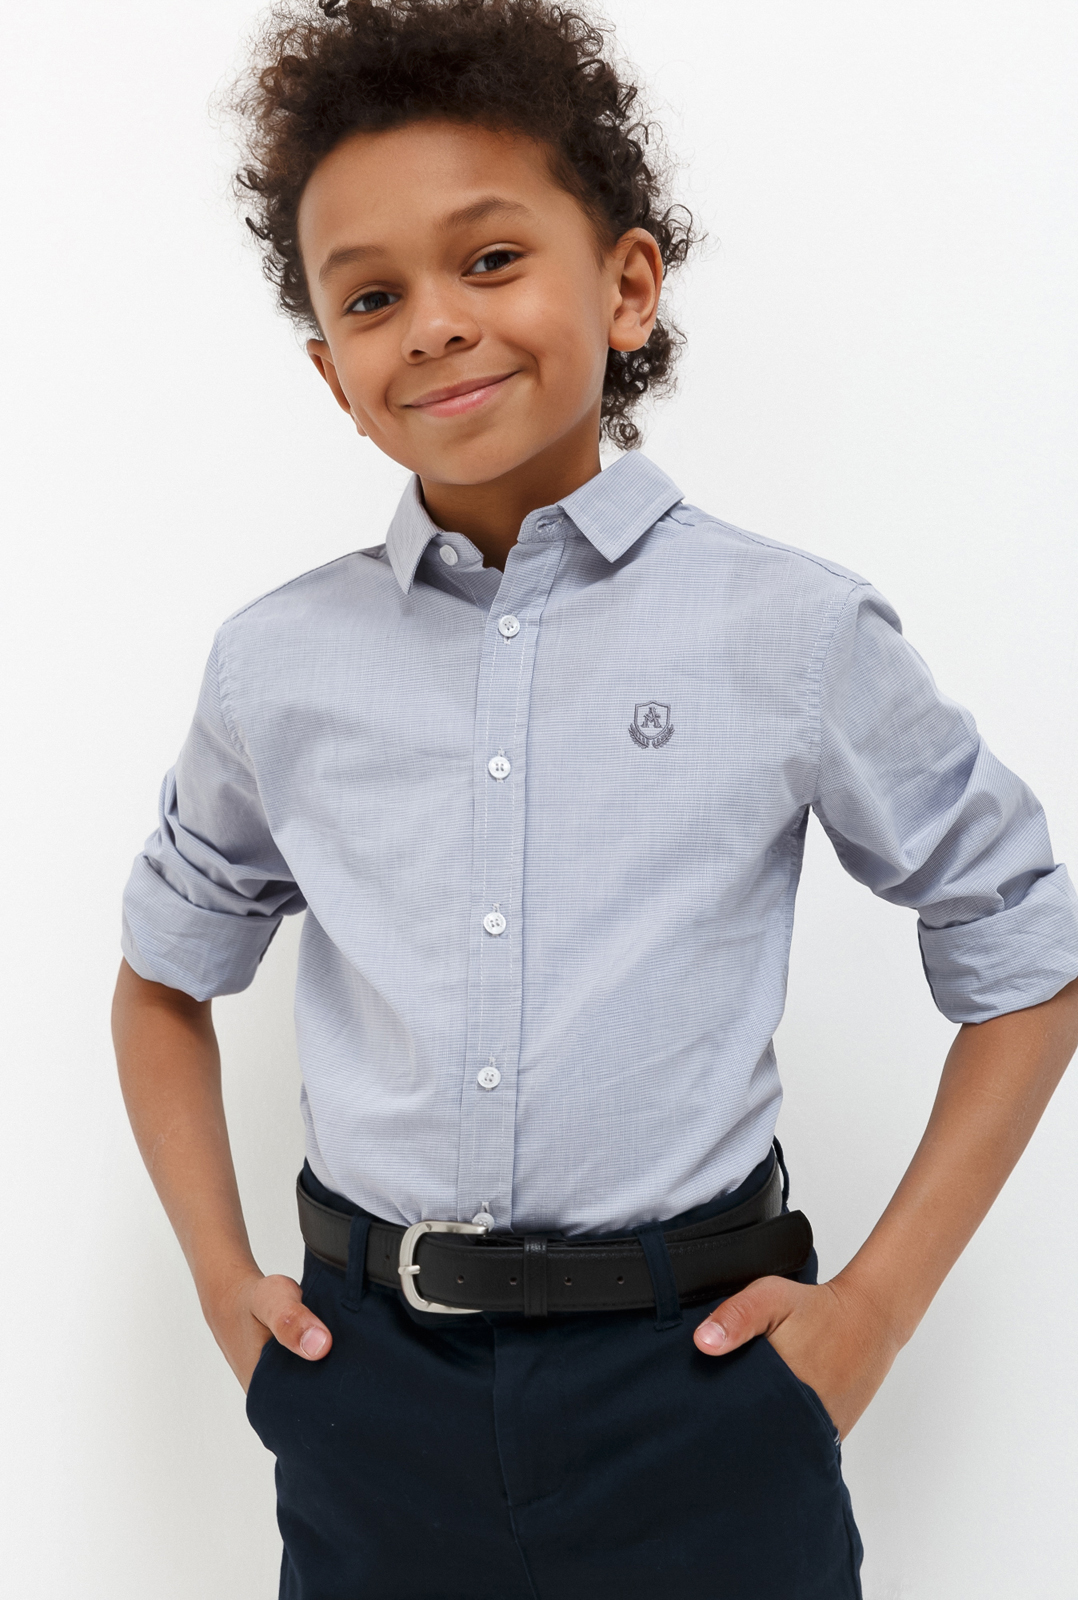 Рубашка для мальчика Acoola Lincoln, цвет: светло-серый. 20140280035_1800. Размер 170